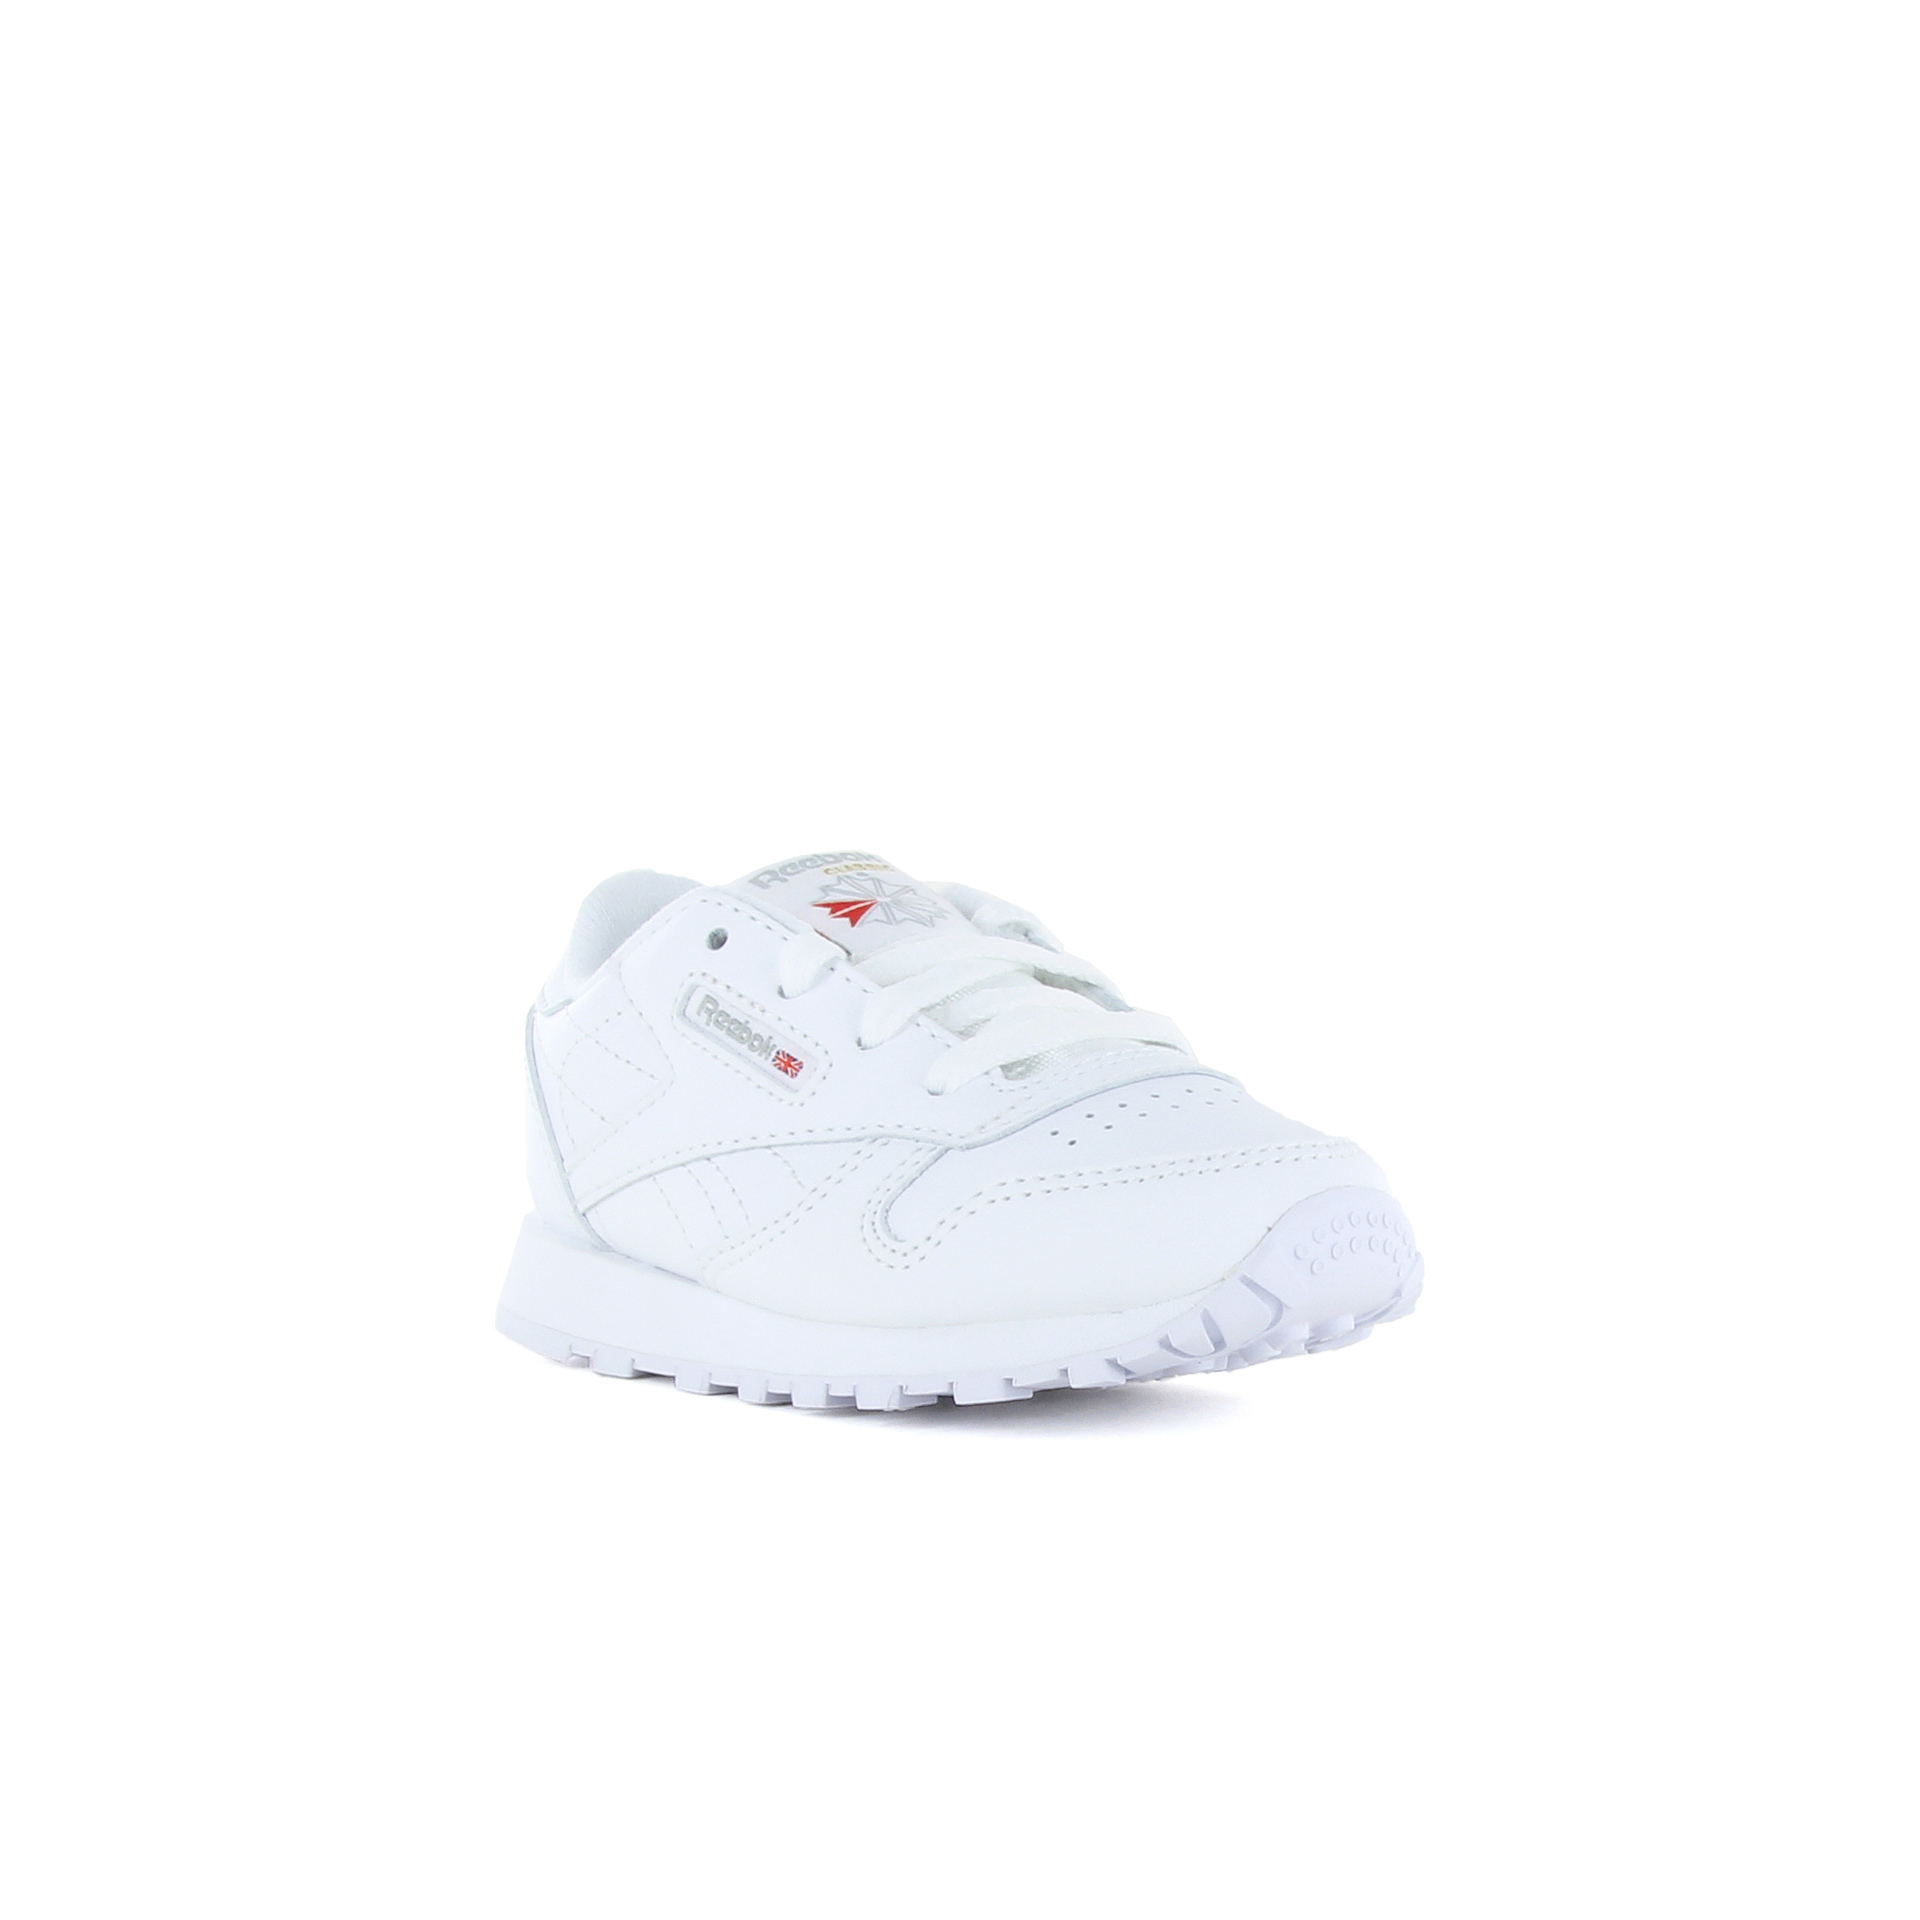 Classic Leather blanco zapatillas bebé tallas 16-27 | Dooers Sneakers